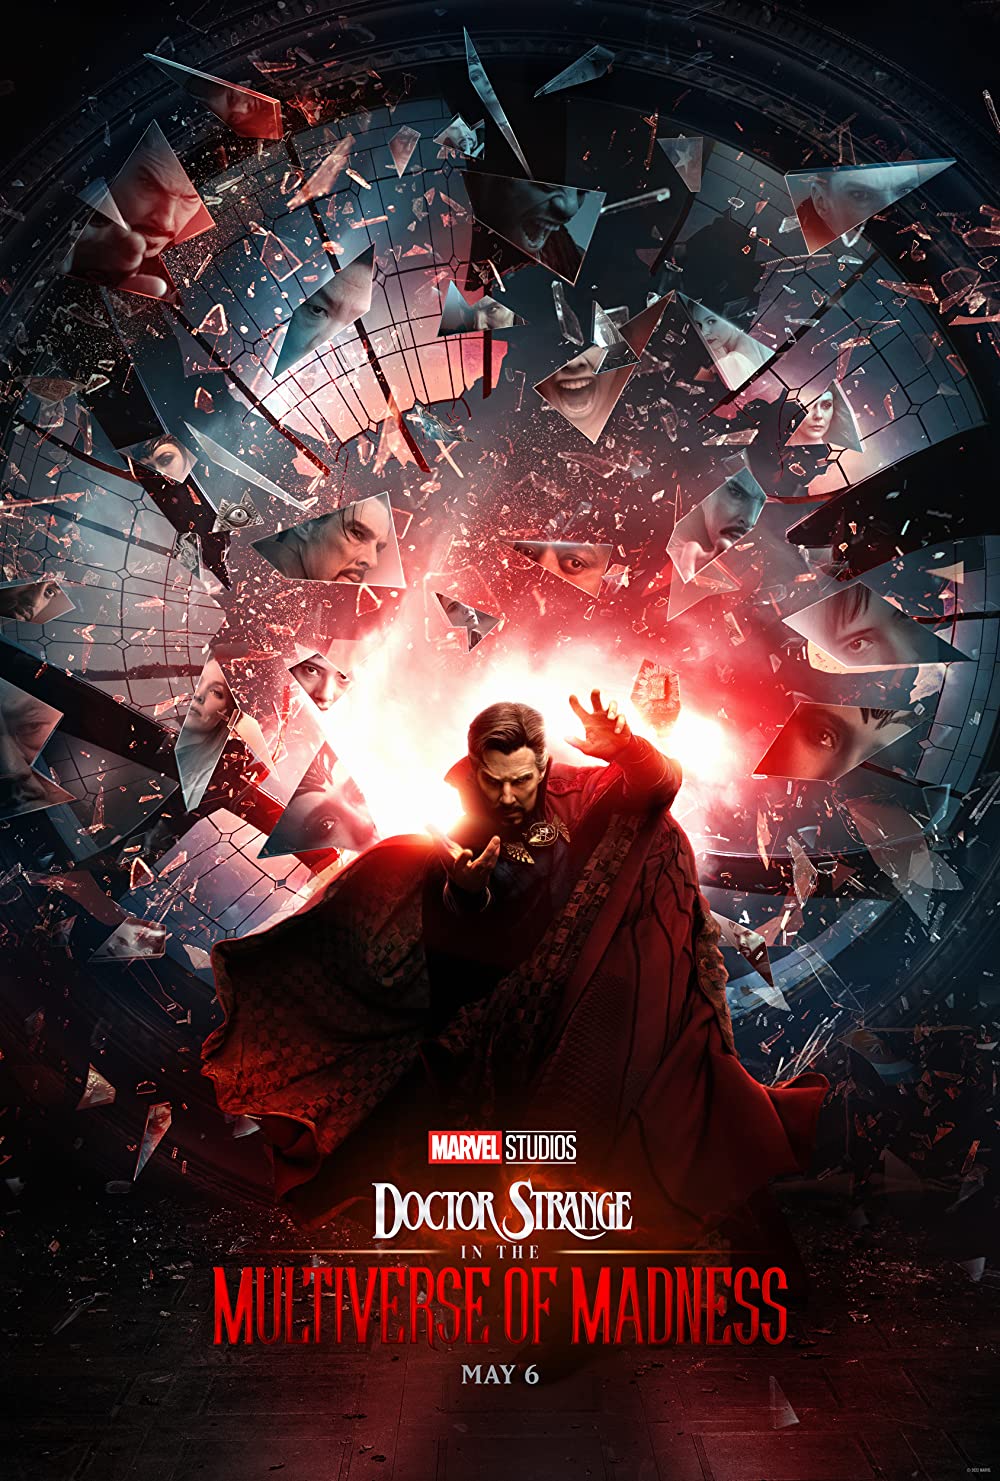 Doctor Strange Movie Poster